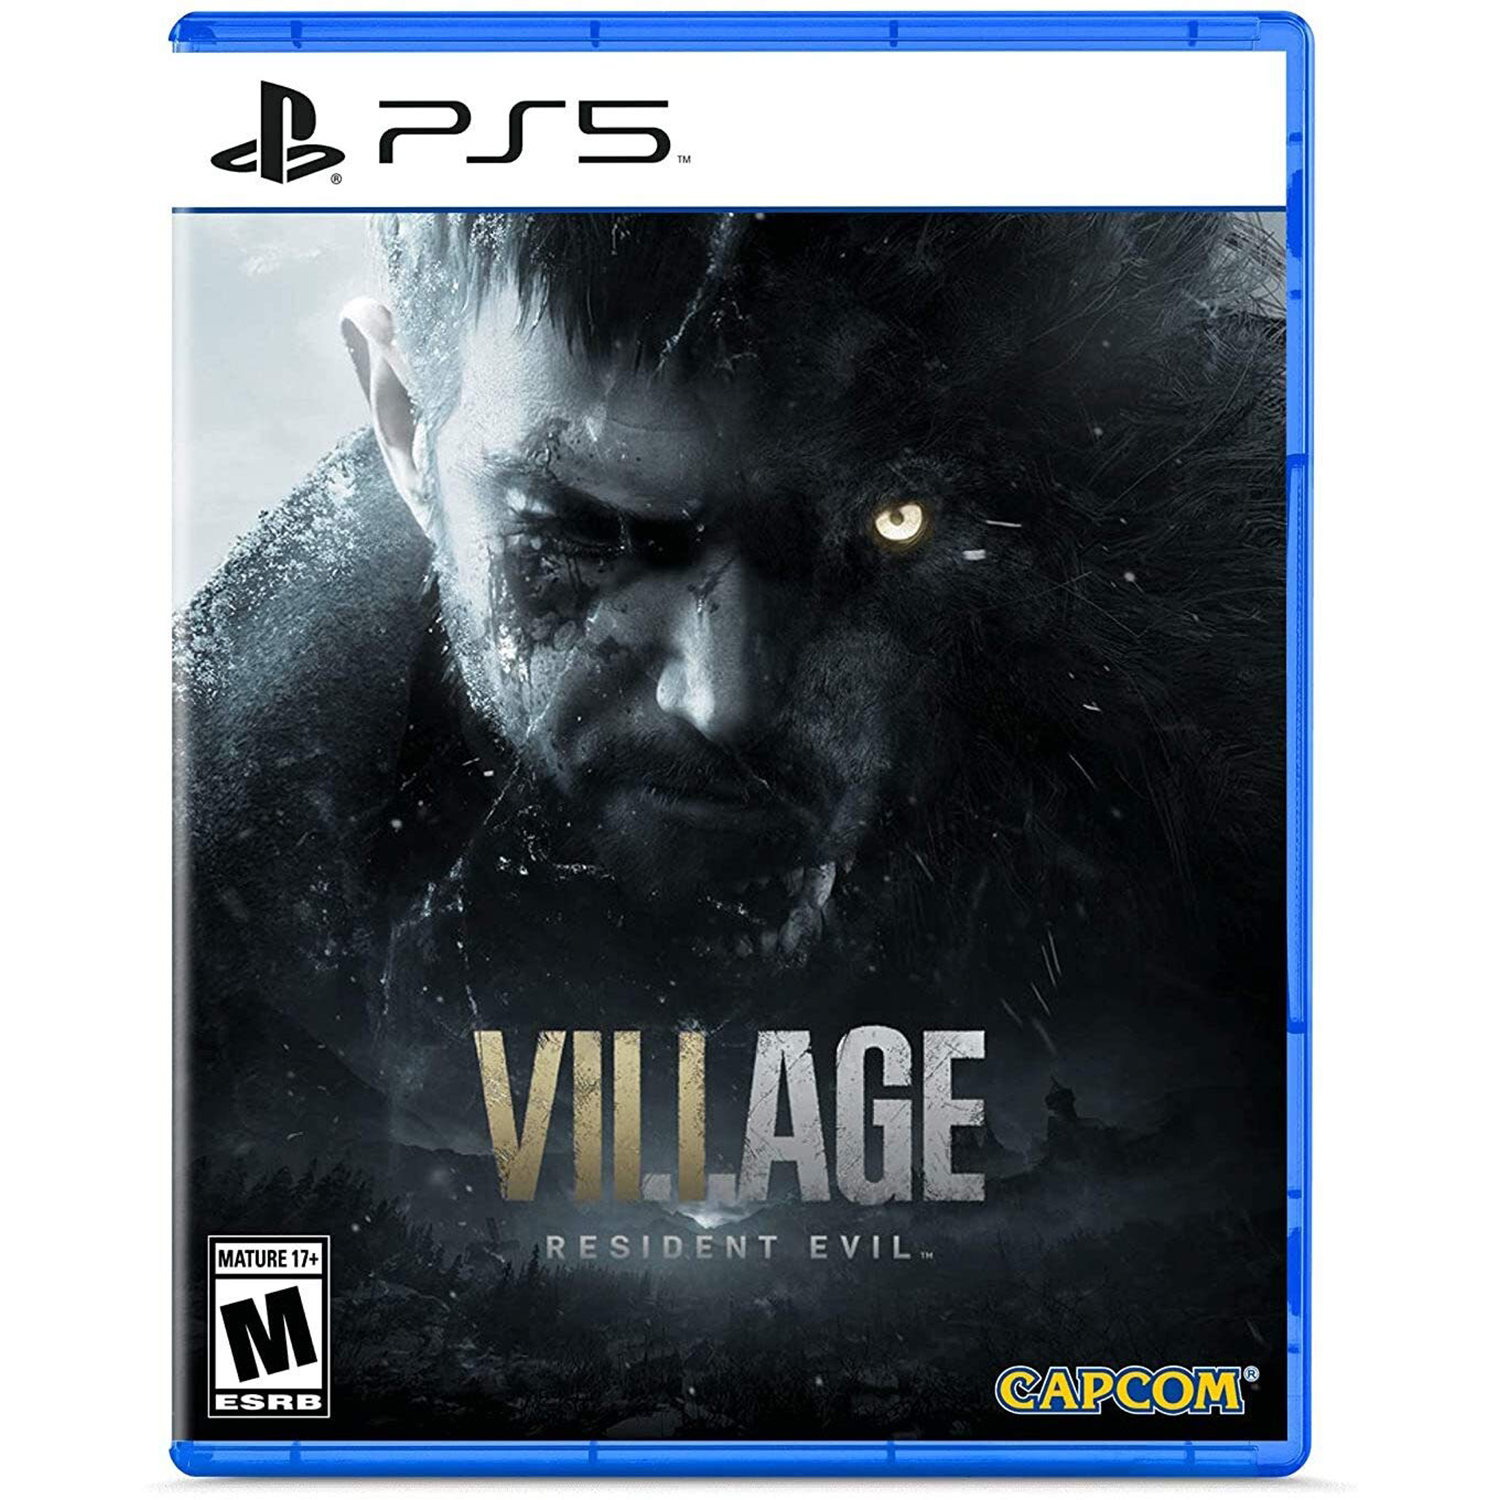 Resident Evil Village And Demon s Souls - Two Game Bundle For PlayStation 5 - $143.46